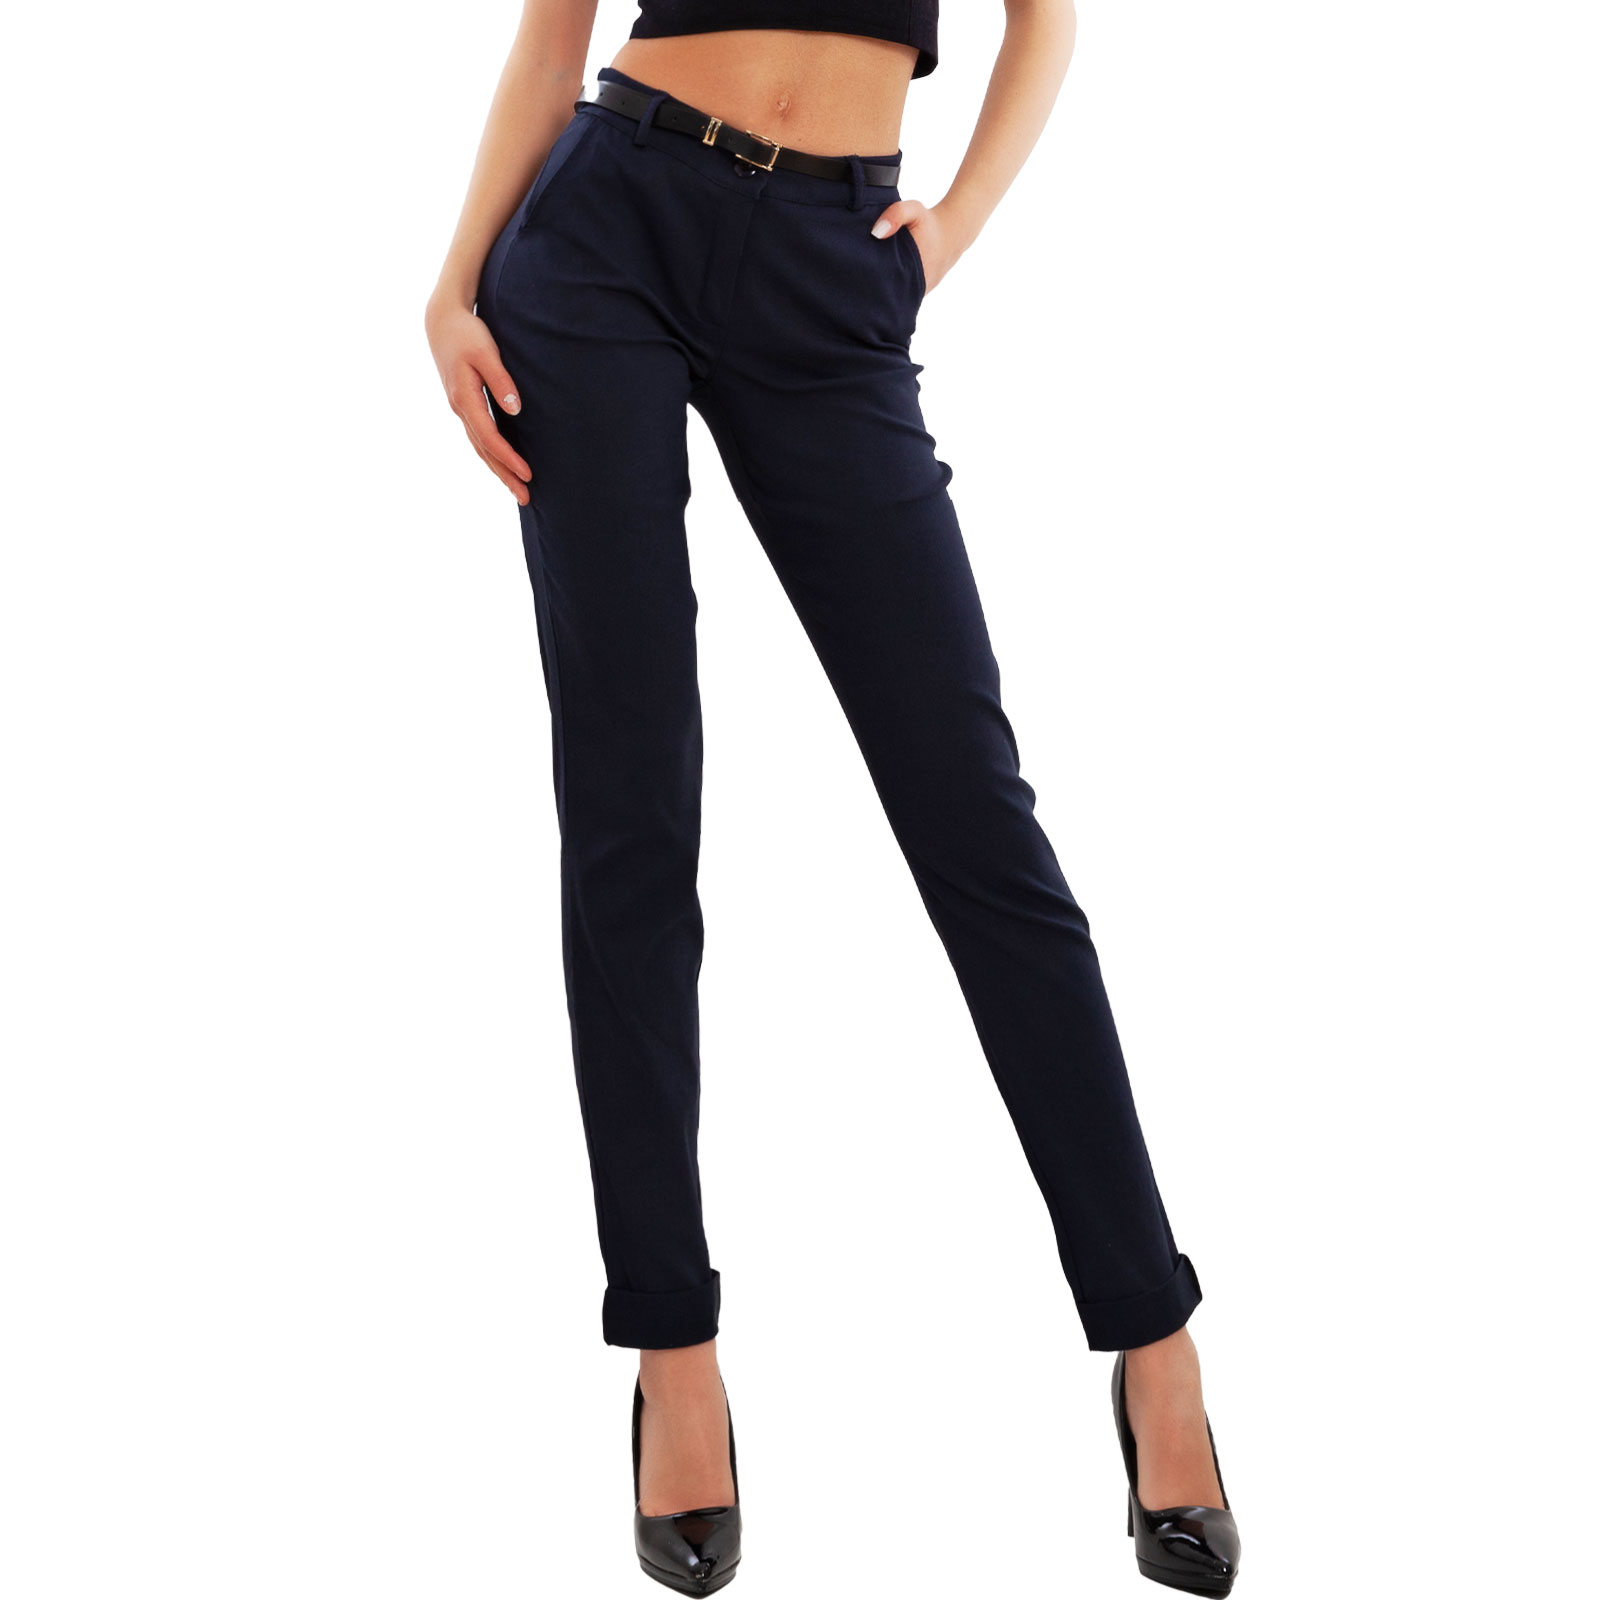 Pantaloni donna classici eleganti tasche cintura vita bassa TOOCOOL VB-2825-1 